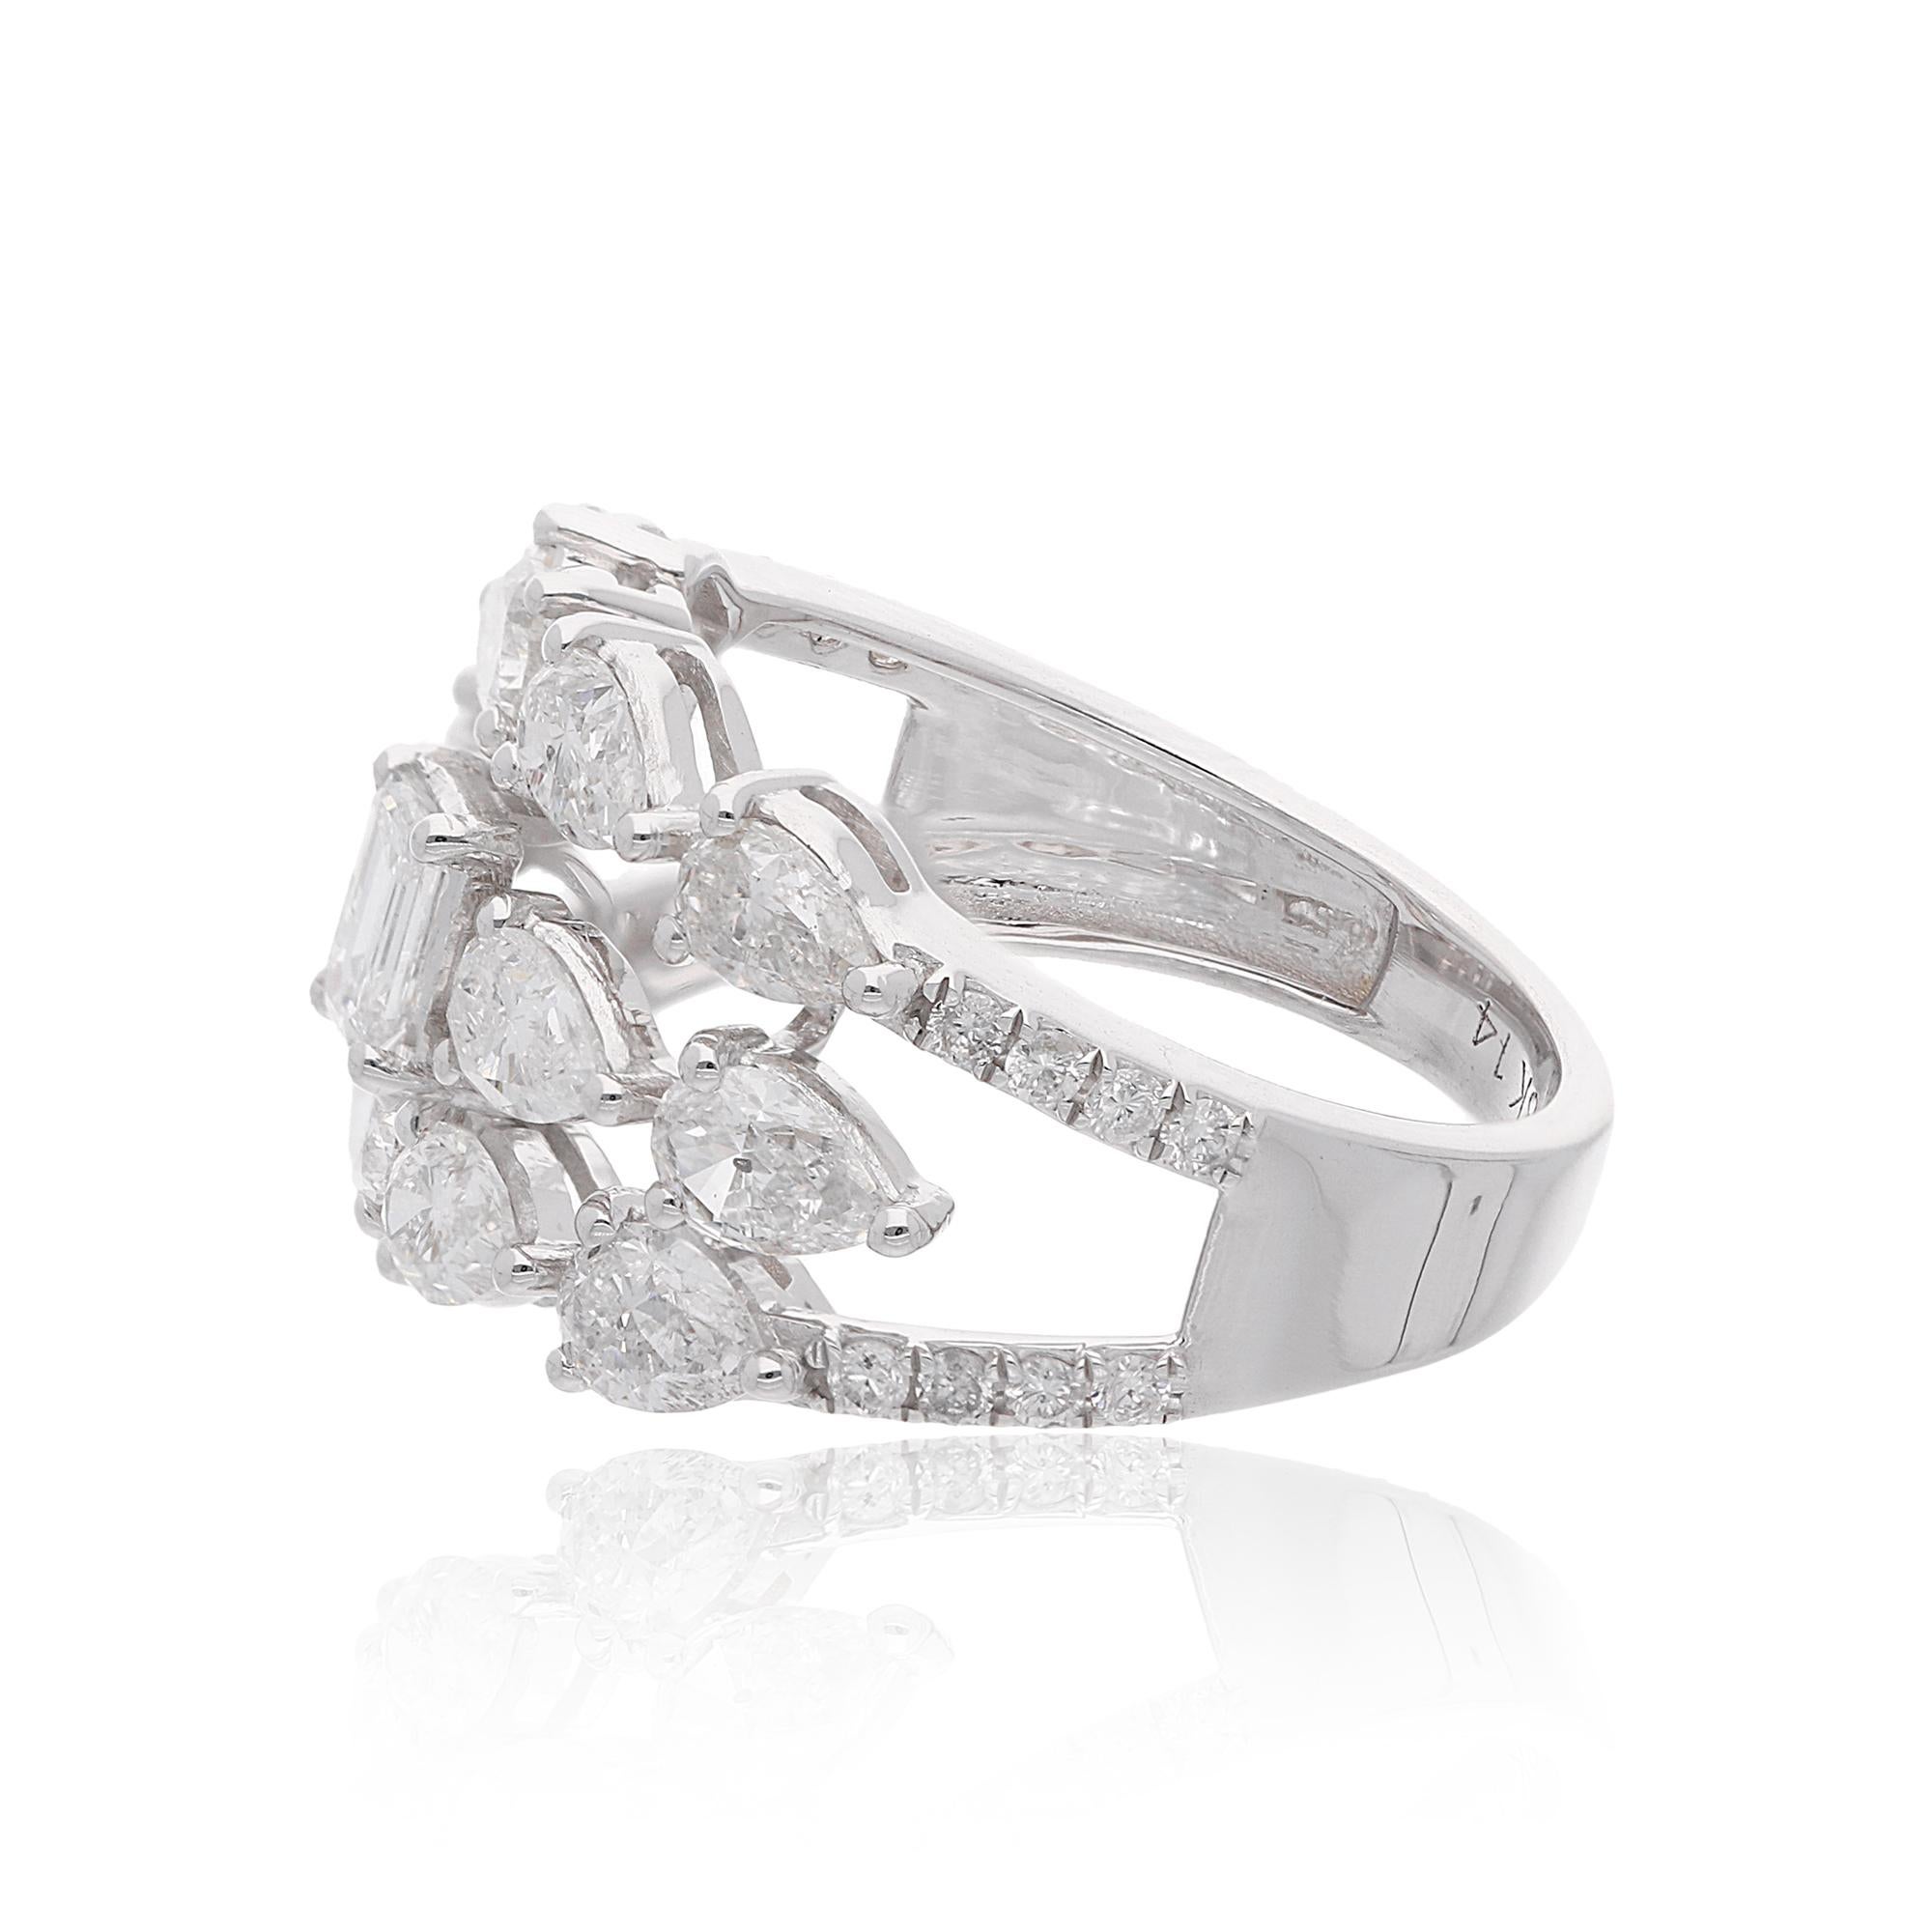 For Sale:  2.75 Carat SI Clarity HI Color Pear Emerald Cut Diamond Ring 18 Karat White Gold 5